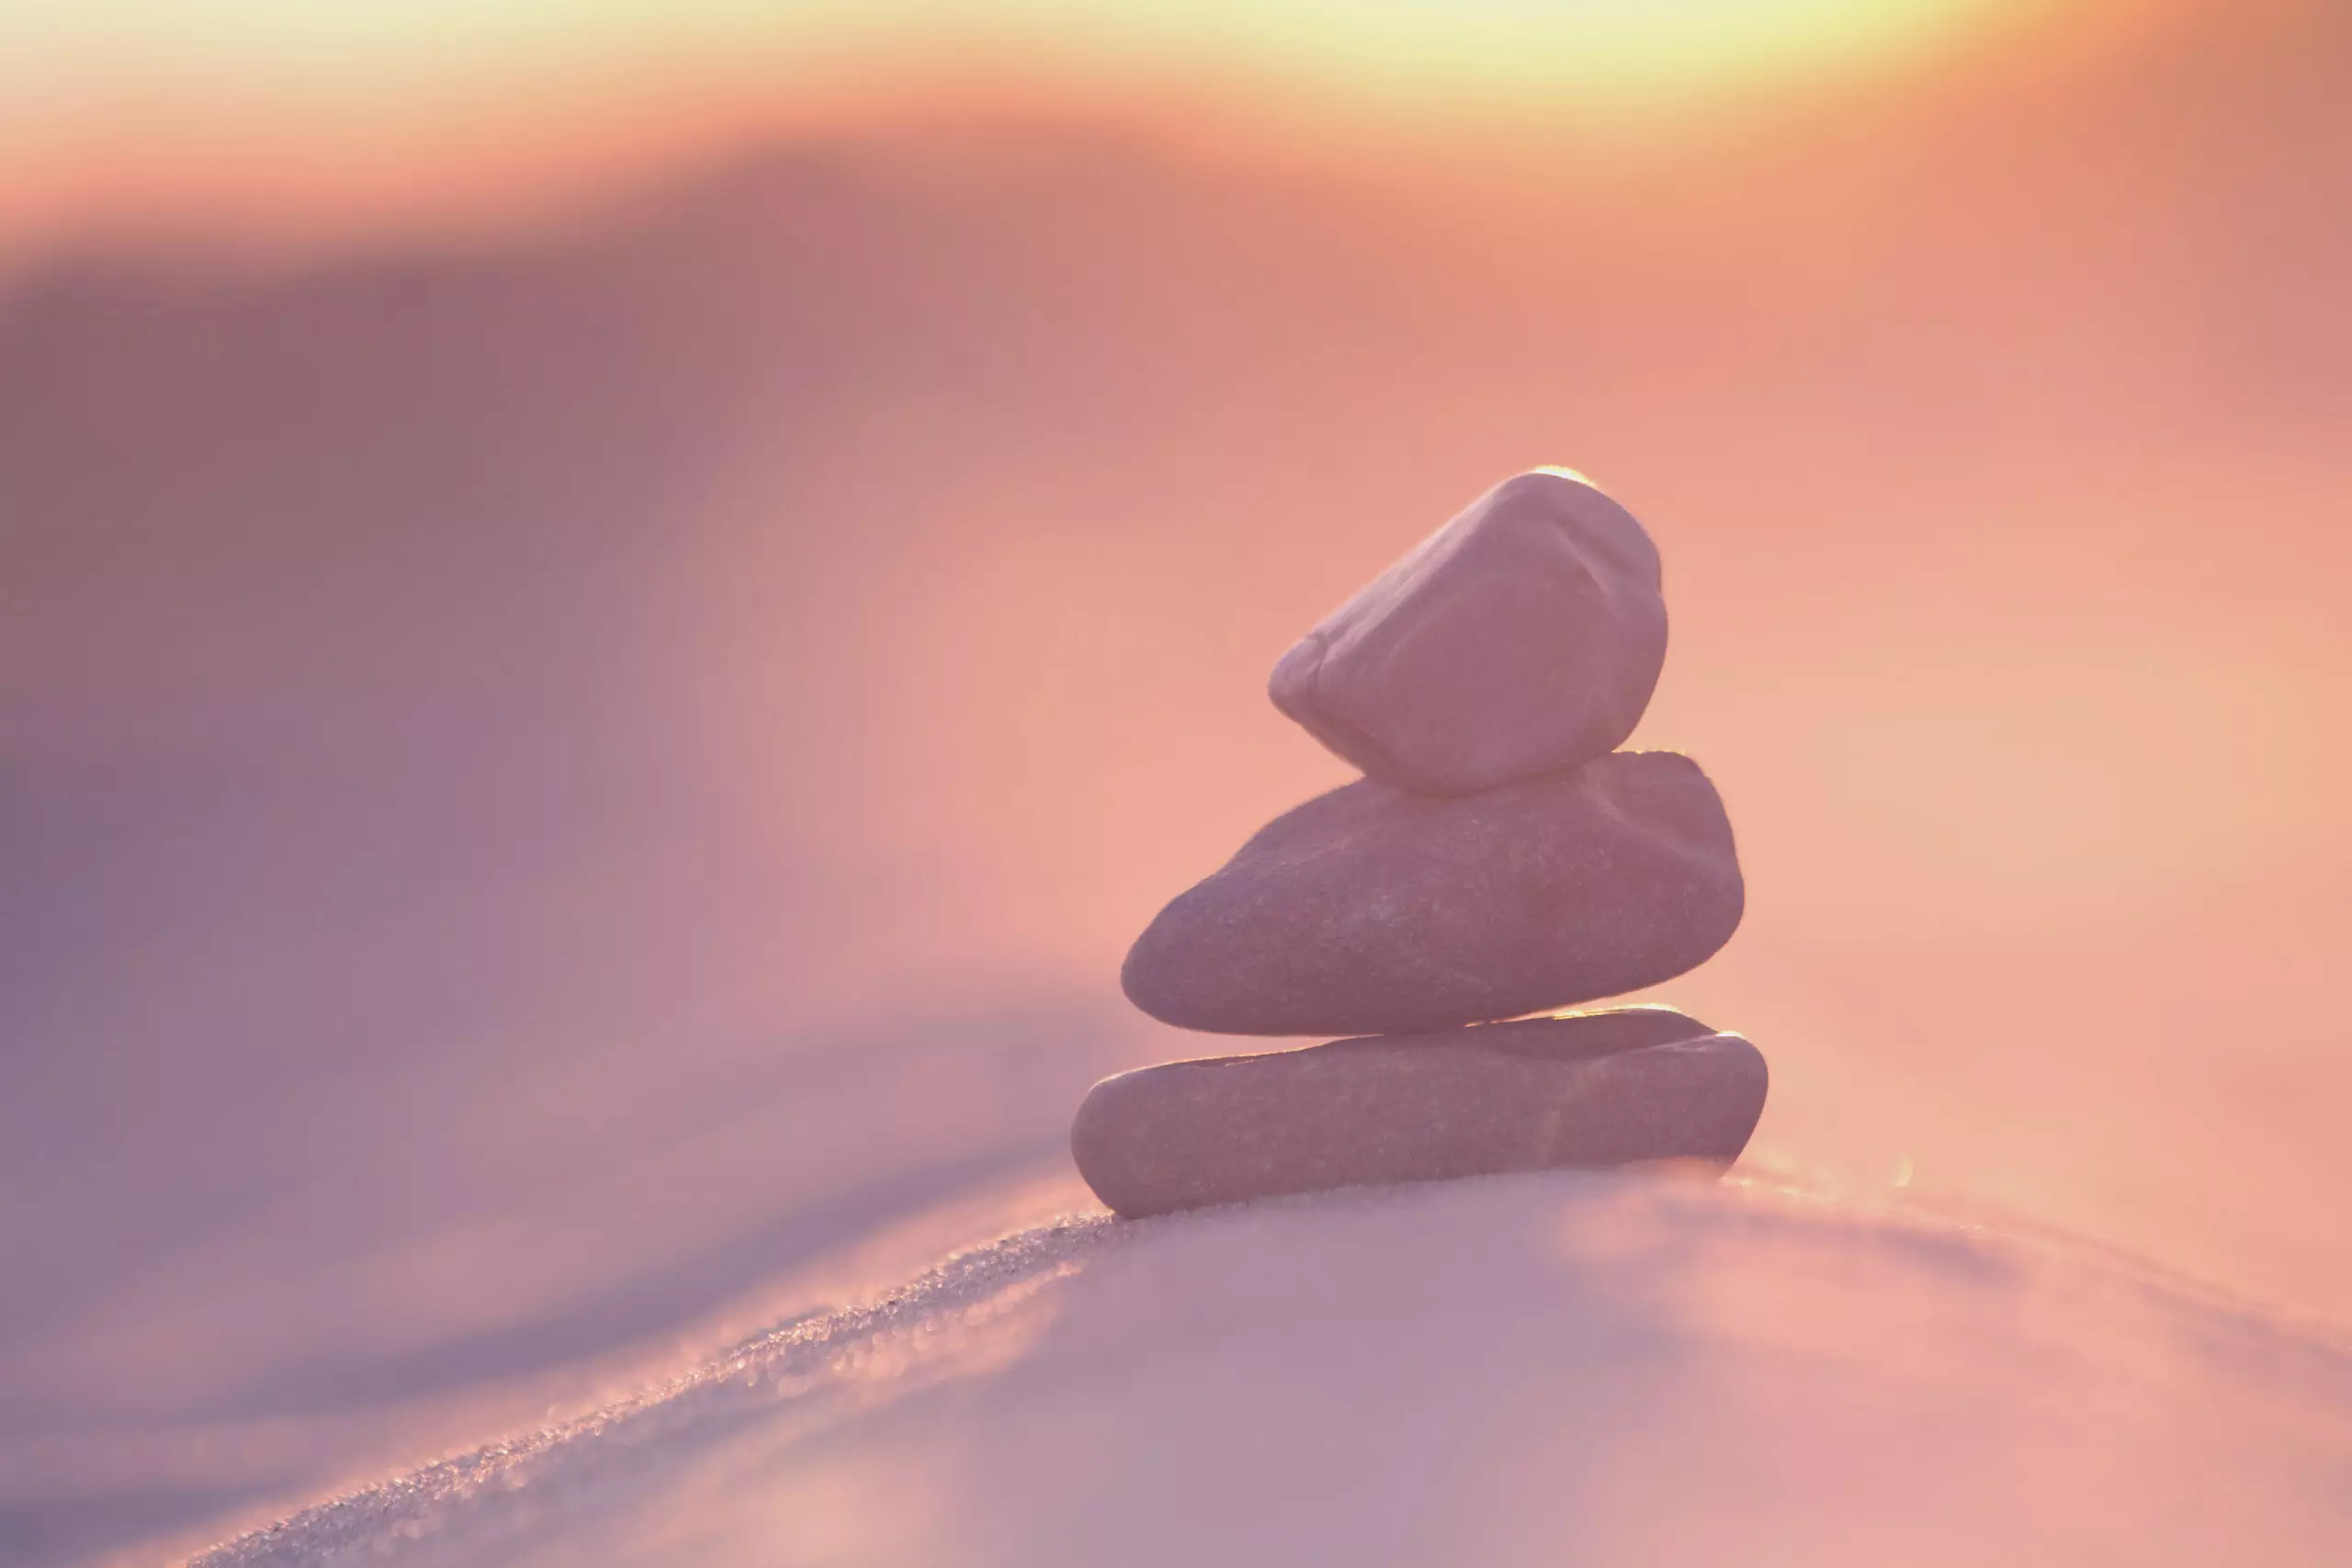 Zen stones in sunset light, peaceful balance